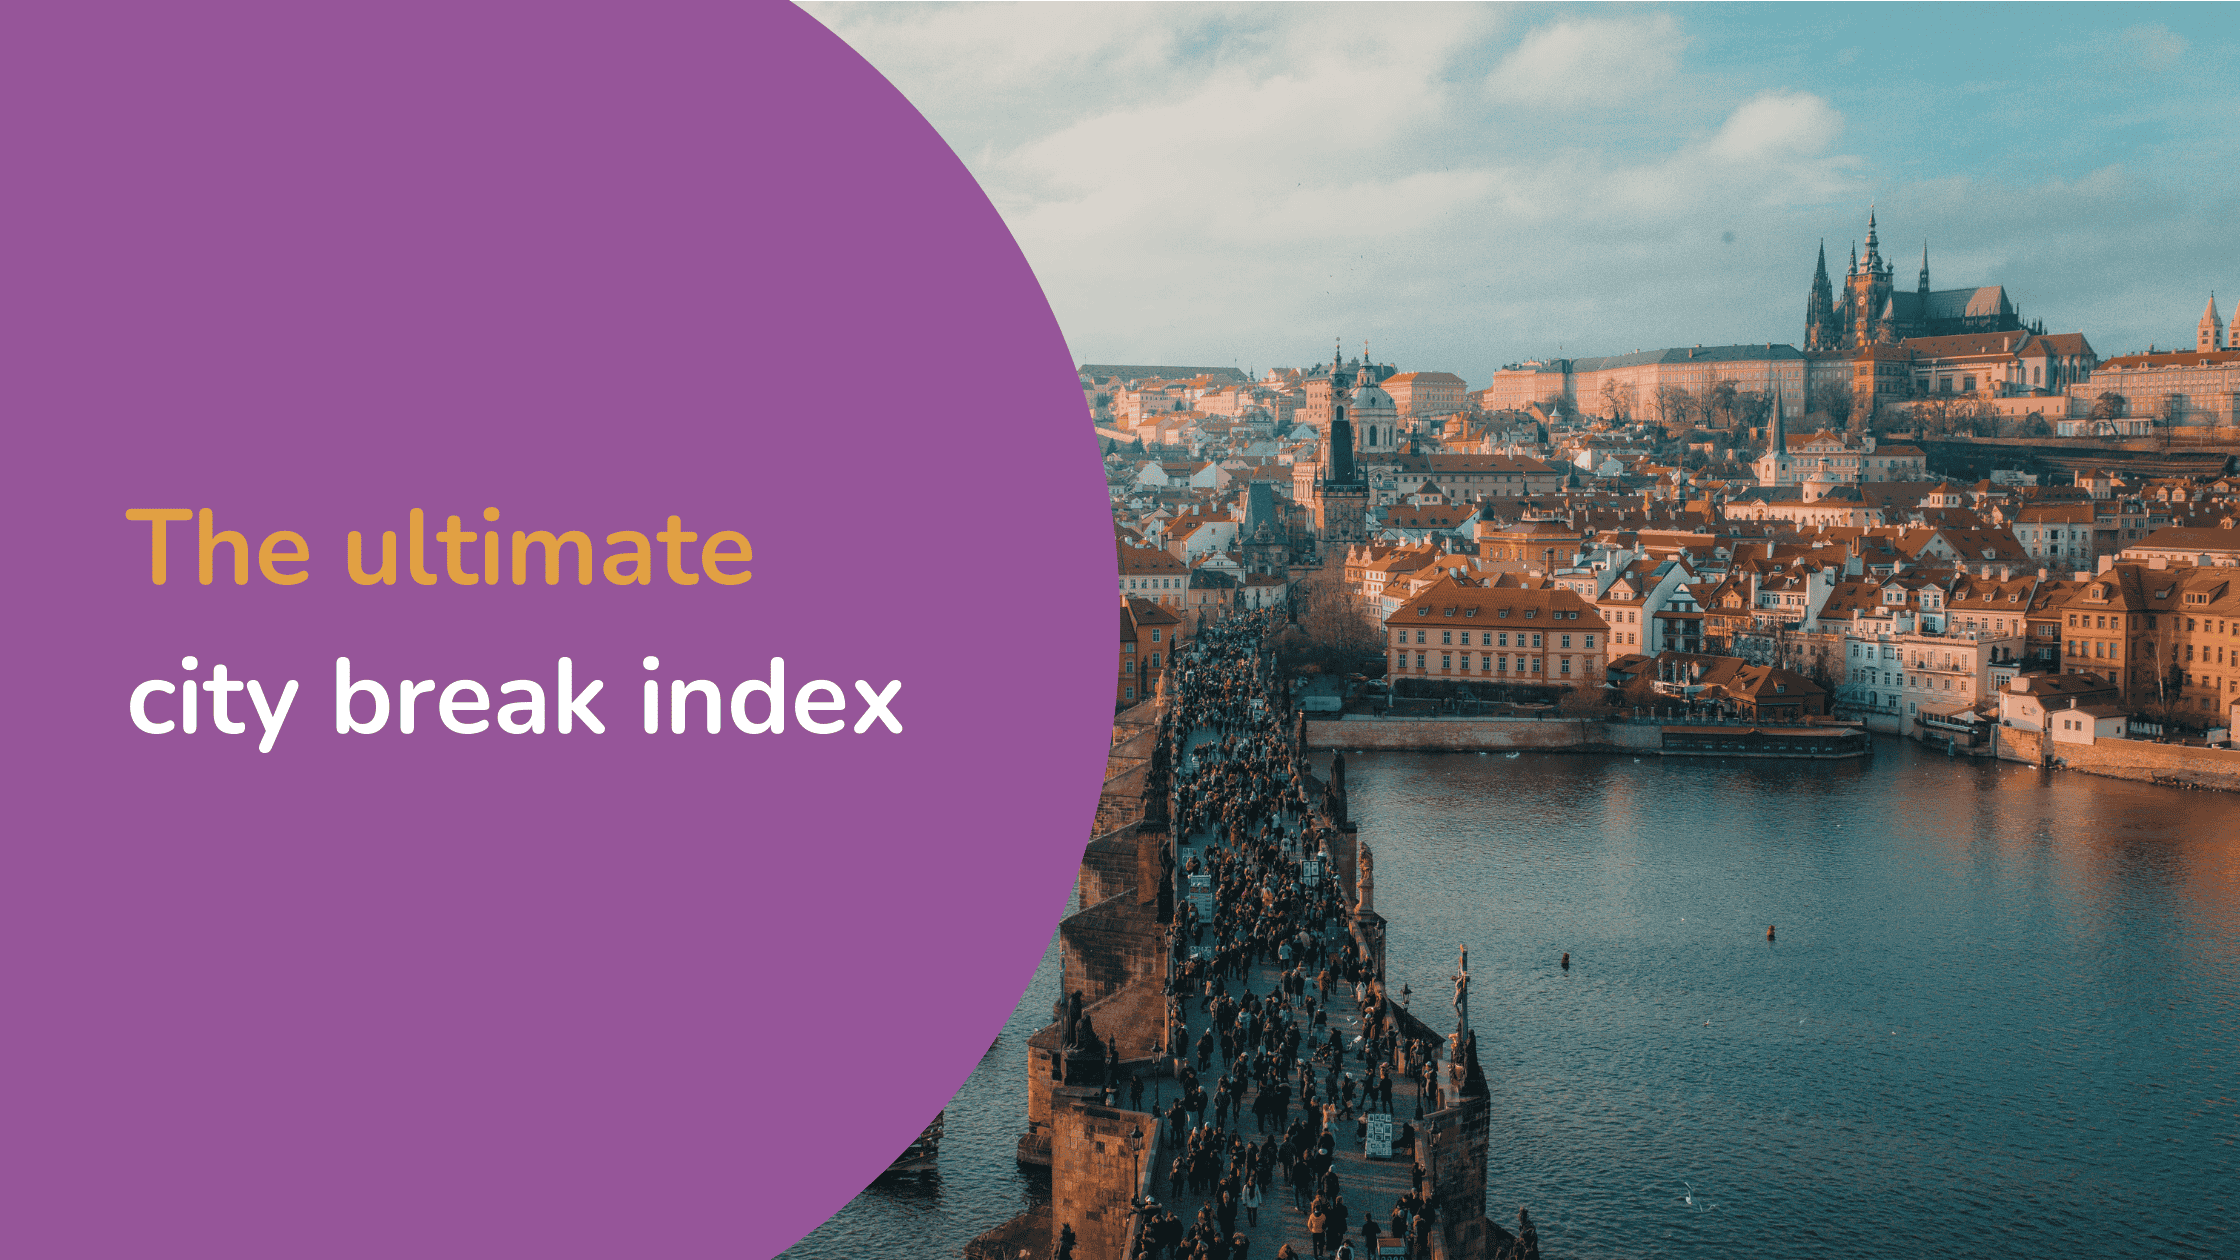 city break index - Image module